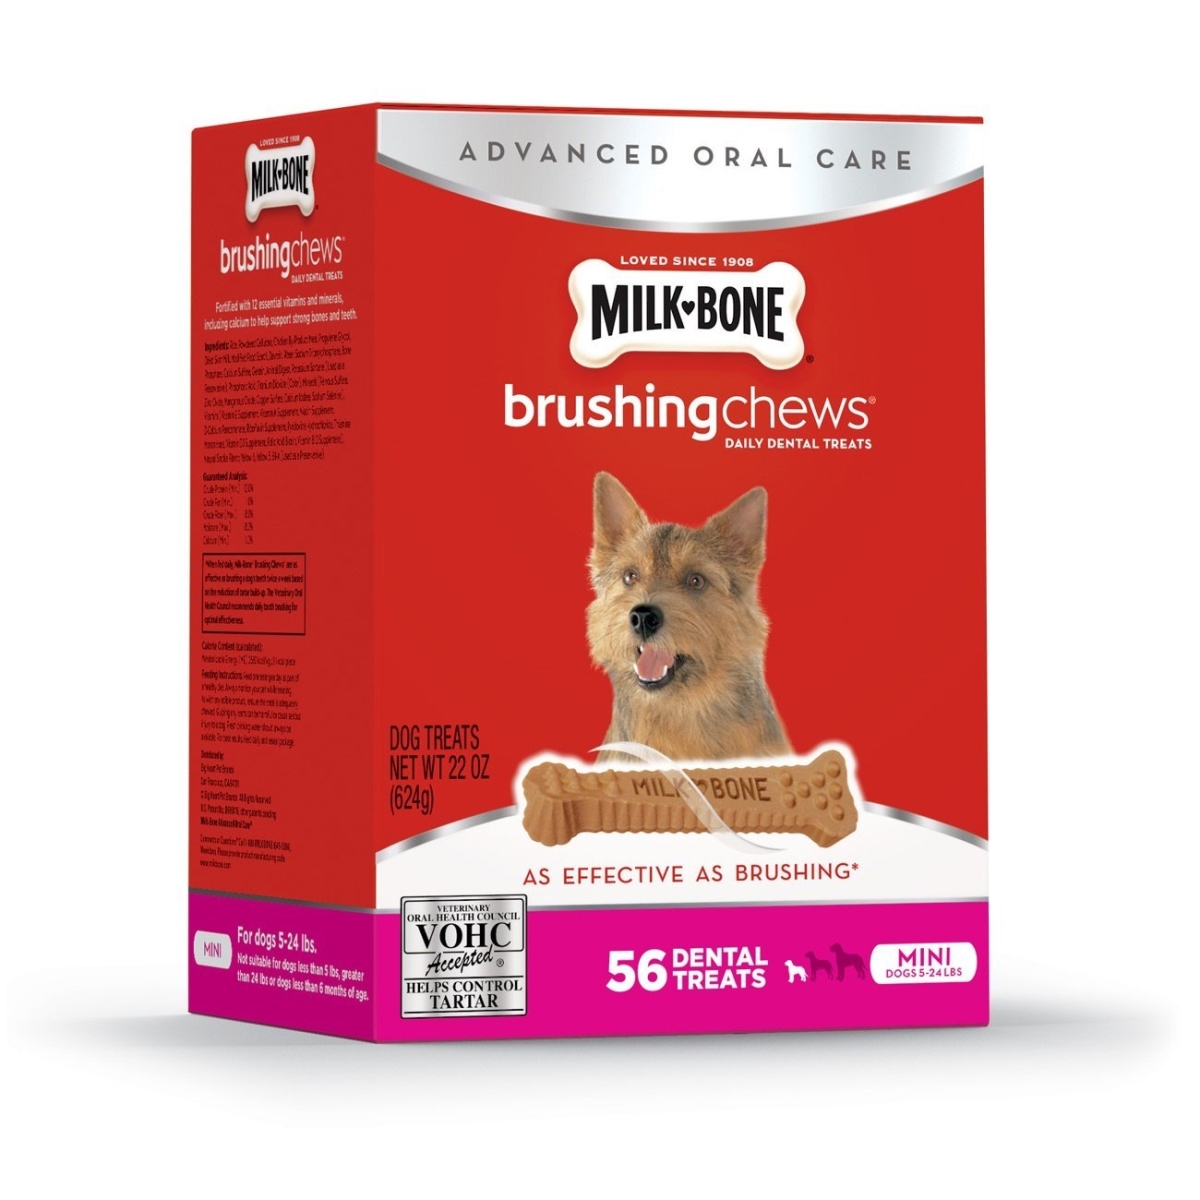 Delmon 799067 24 Oz Milk-bone Dog Treat Variety Pack For Small & Medium Dogs - Pack Of 12